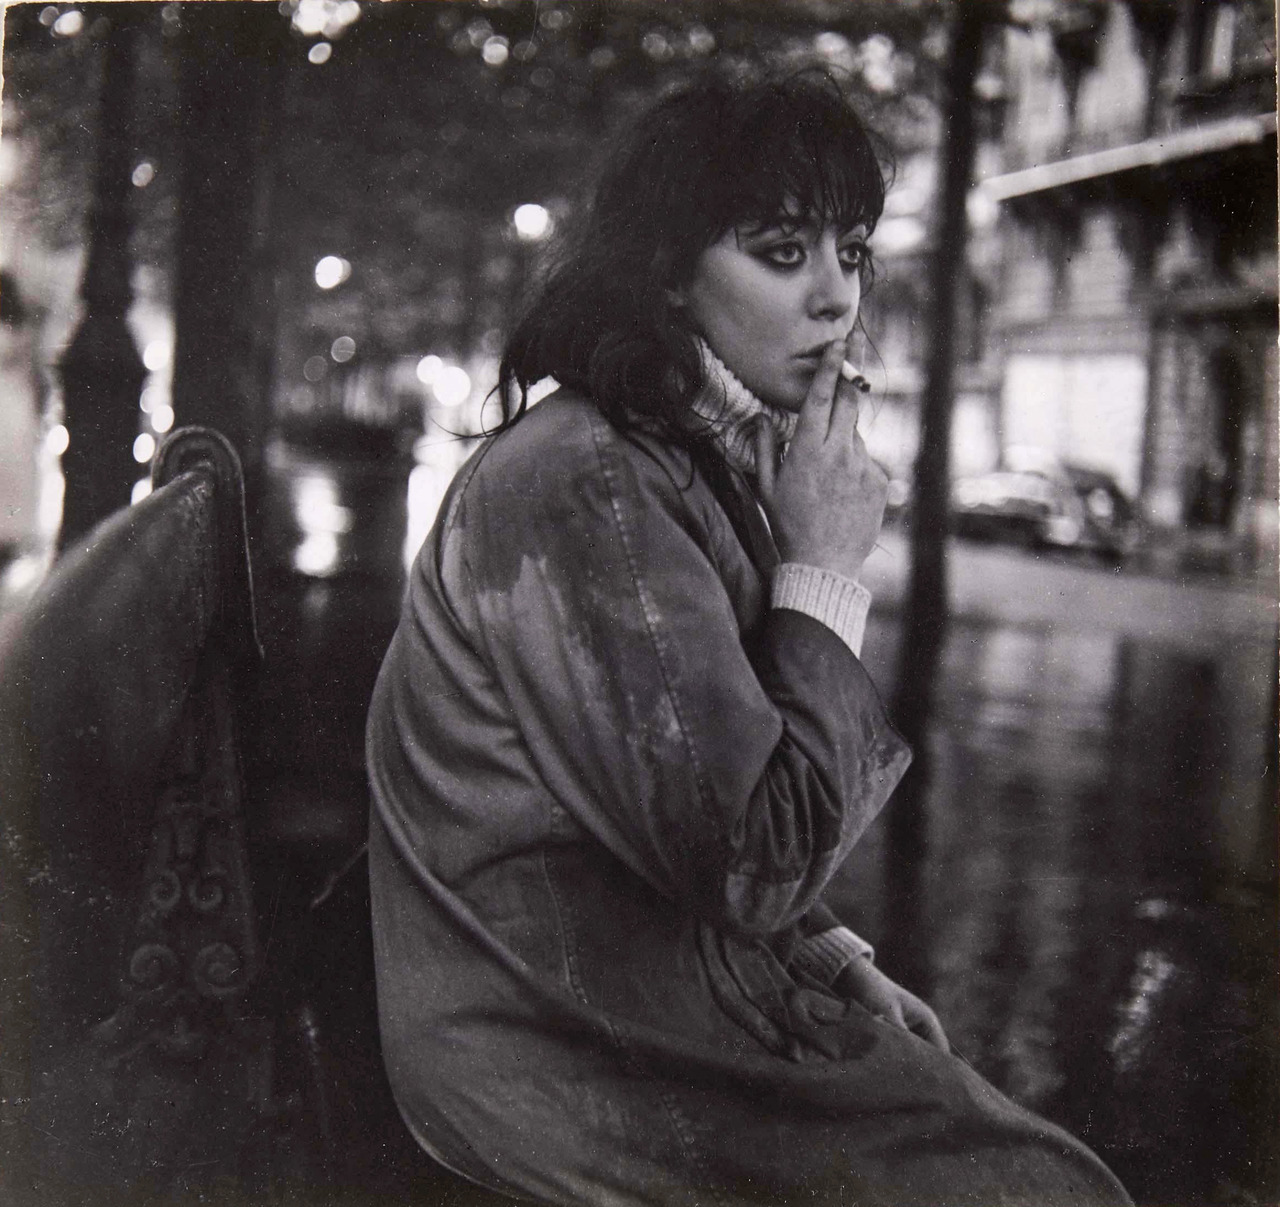 joeinct: Vali with Cigarette on Bench in the Rain, Photo by Ed Van der Elsken, 1950